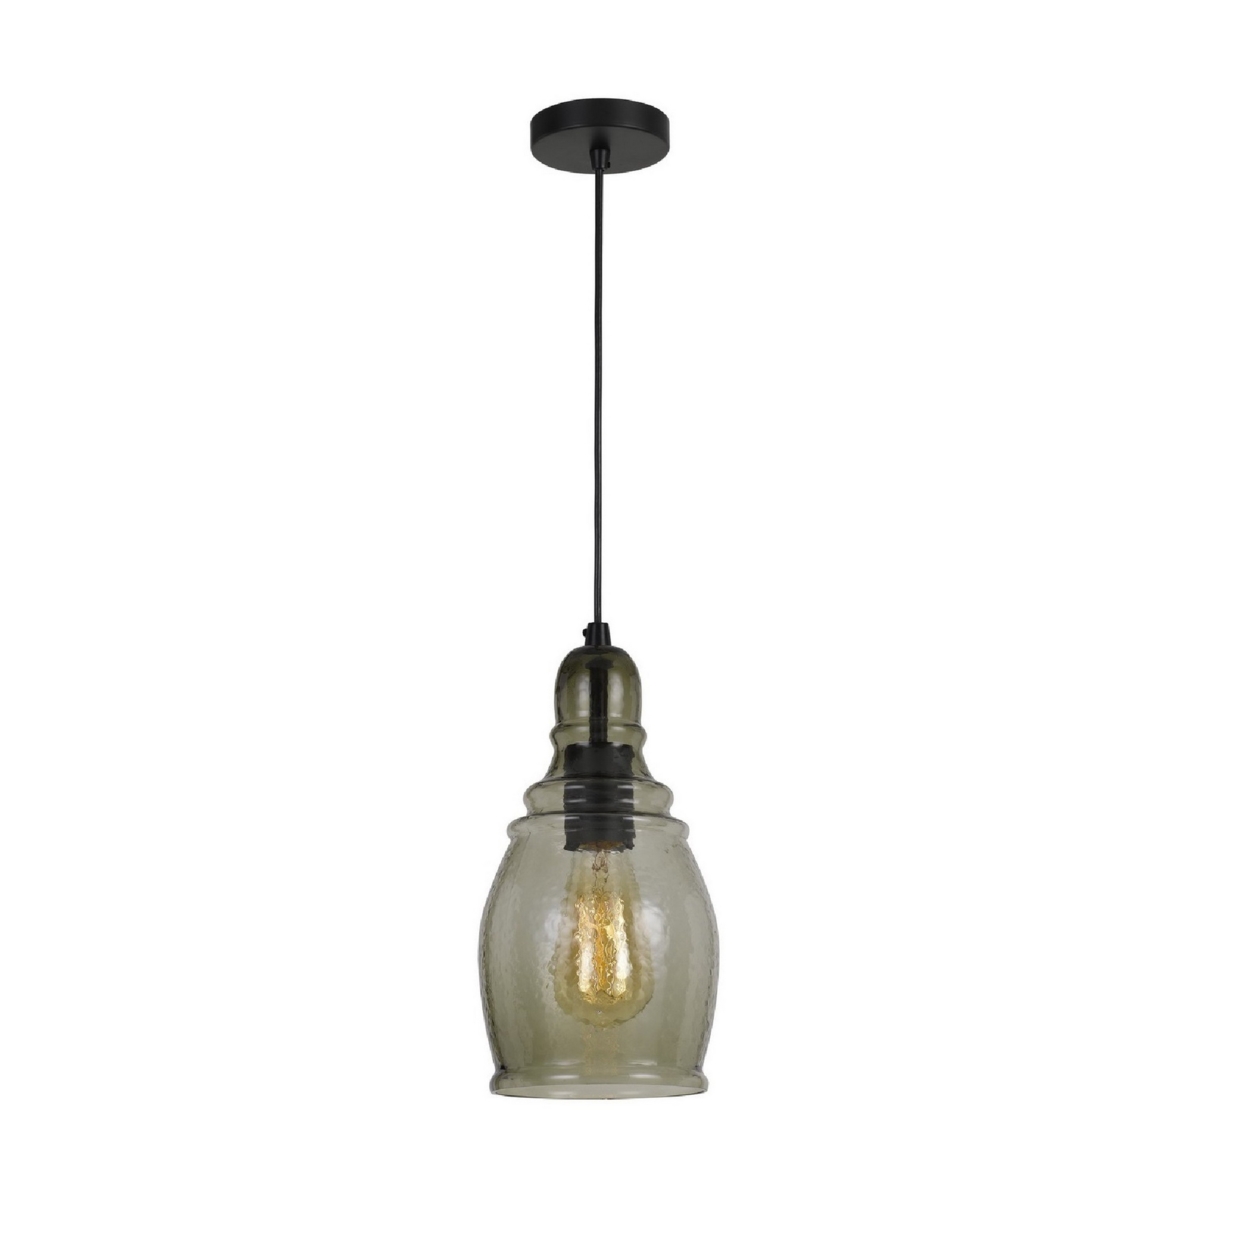 6 Inch Modern LED Pendent Light, Rippled Glass Shade, Smoky Finish, Black- Saltoro Sherpi